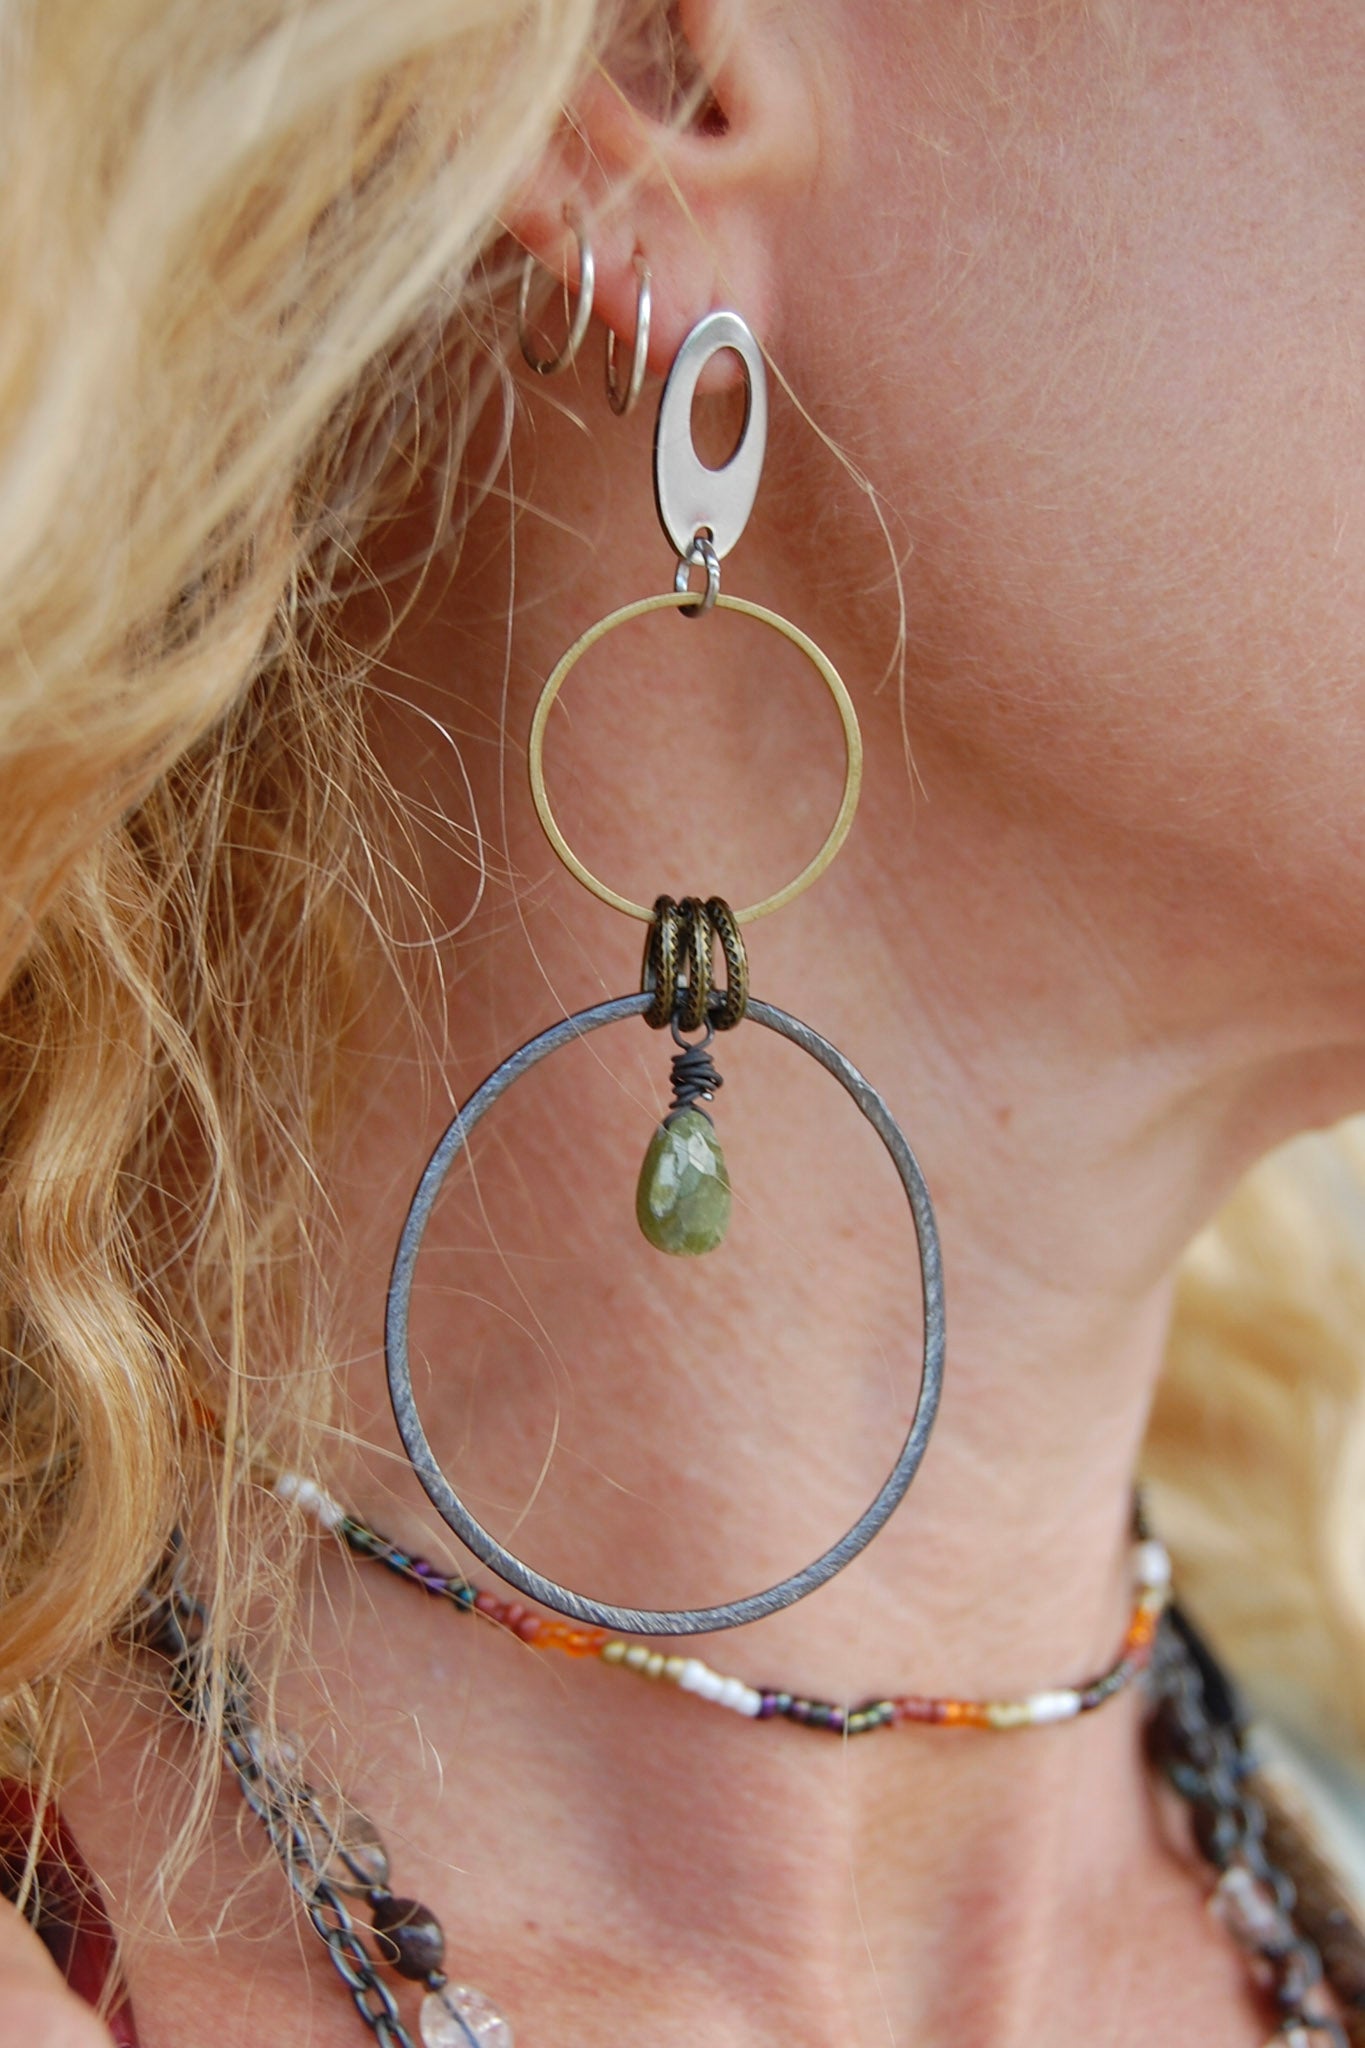 Spirit Lala Boho: Oval Top Gold & Black 2 Circle Earrings in Green Jade